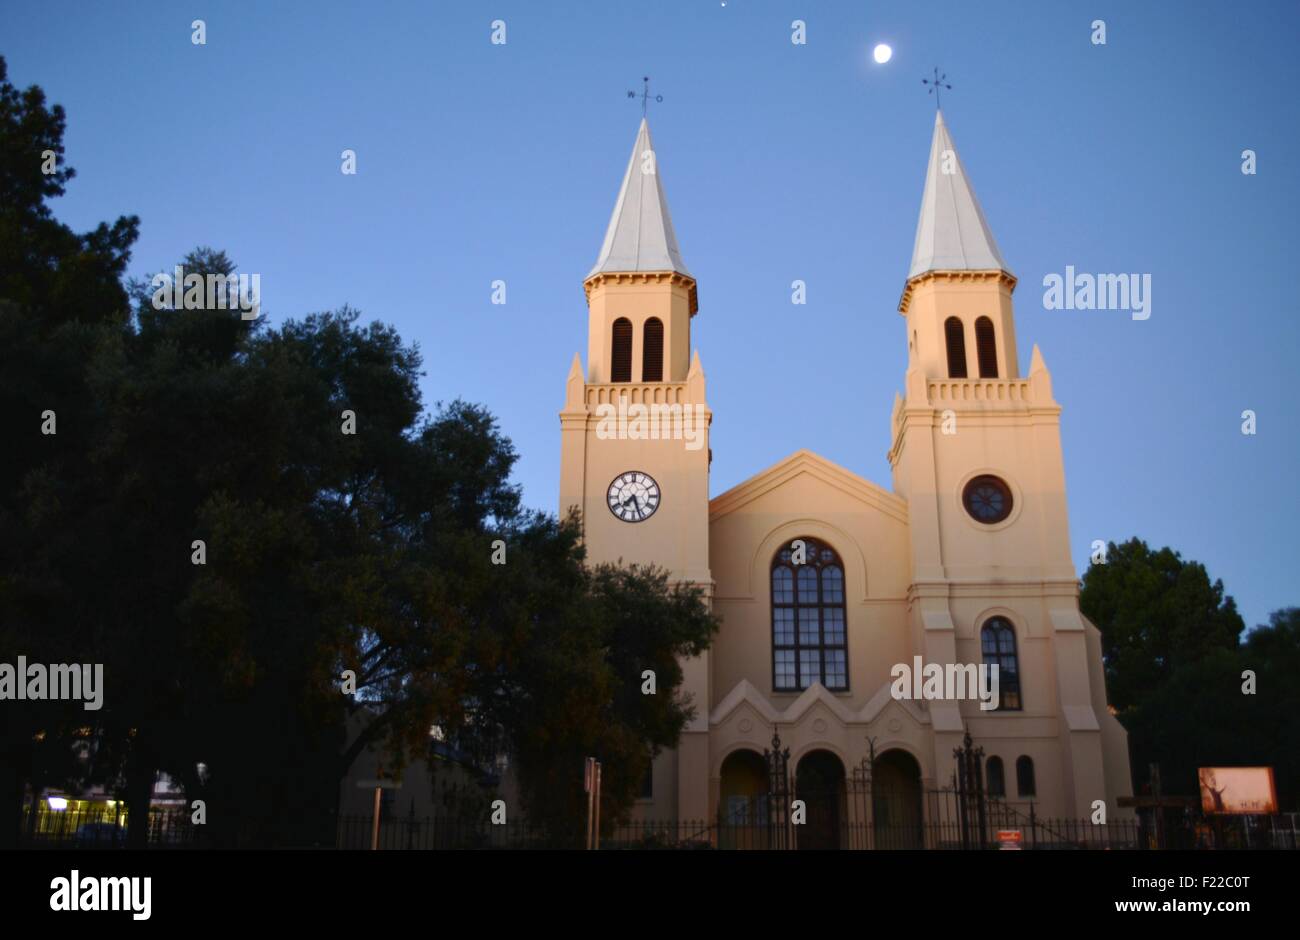 Cityscape, Building - Church, Twin tower church ( Afrikaans language:Tweetoring kerk) Stock Photo